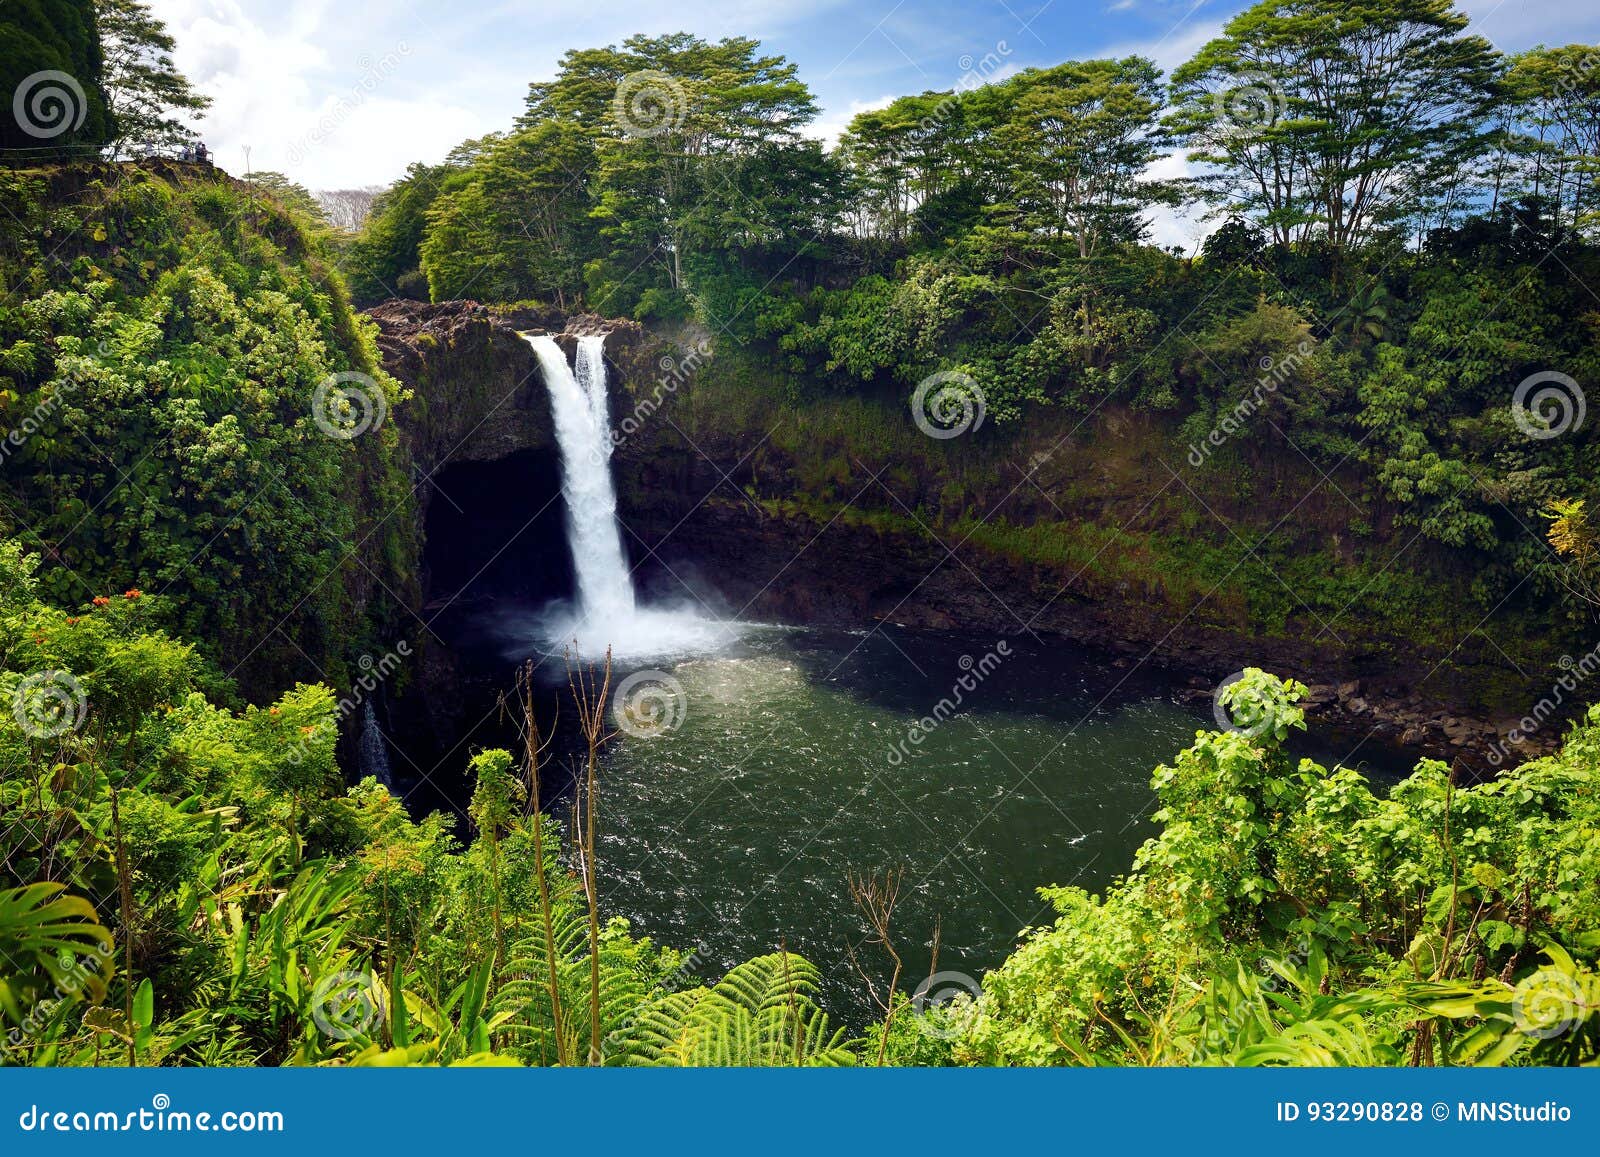 majesitc rainbow falls waterfall in hilo, wailuku river state park, hawaii